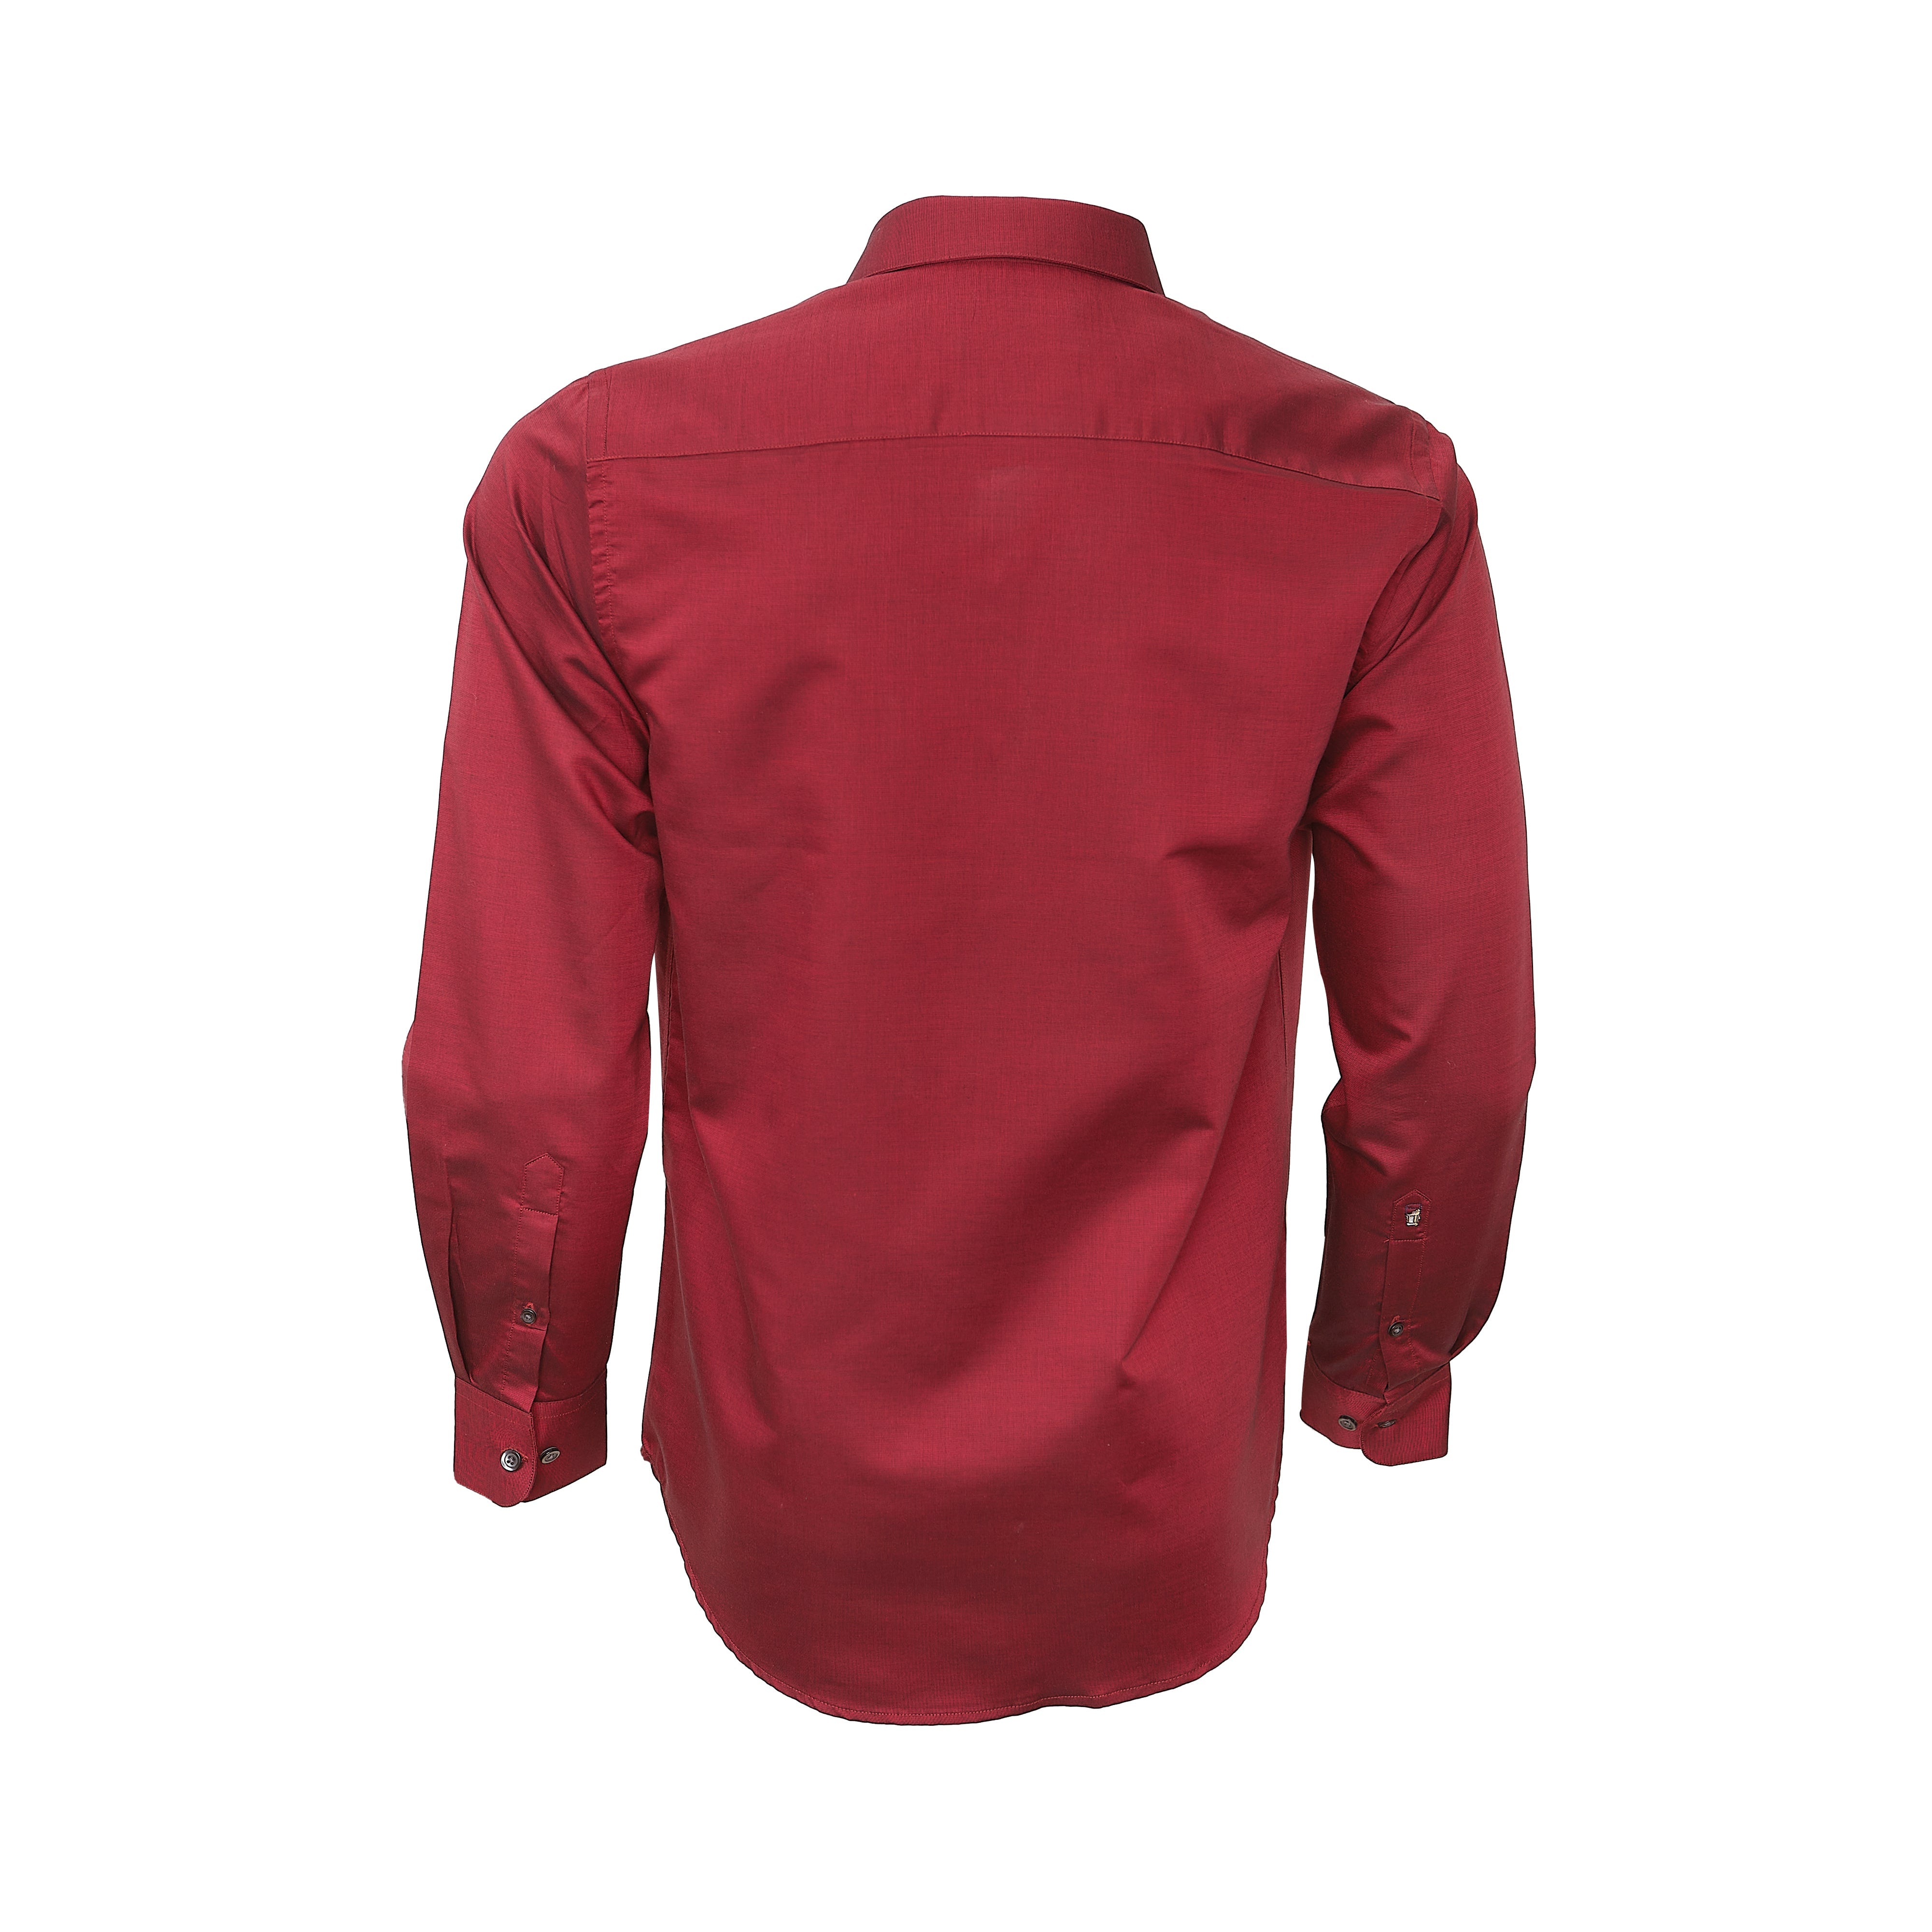 Supima Cotton,  Maroon  Full-sleeved shirt